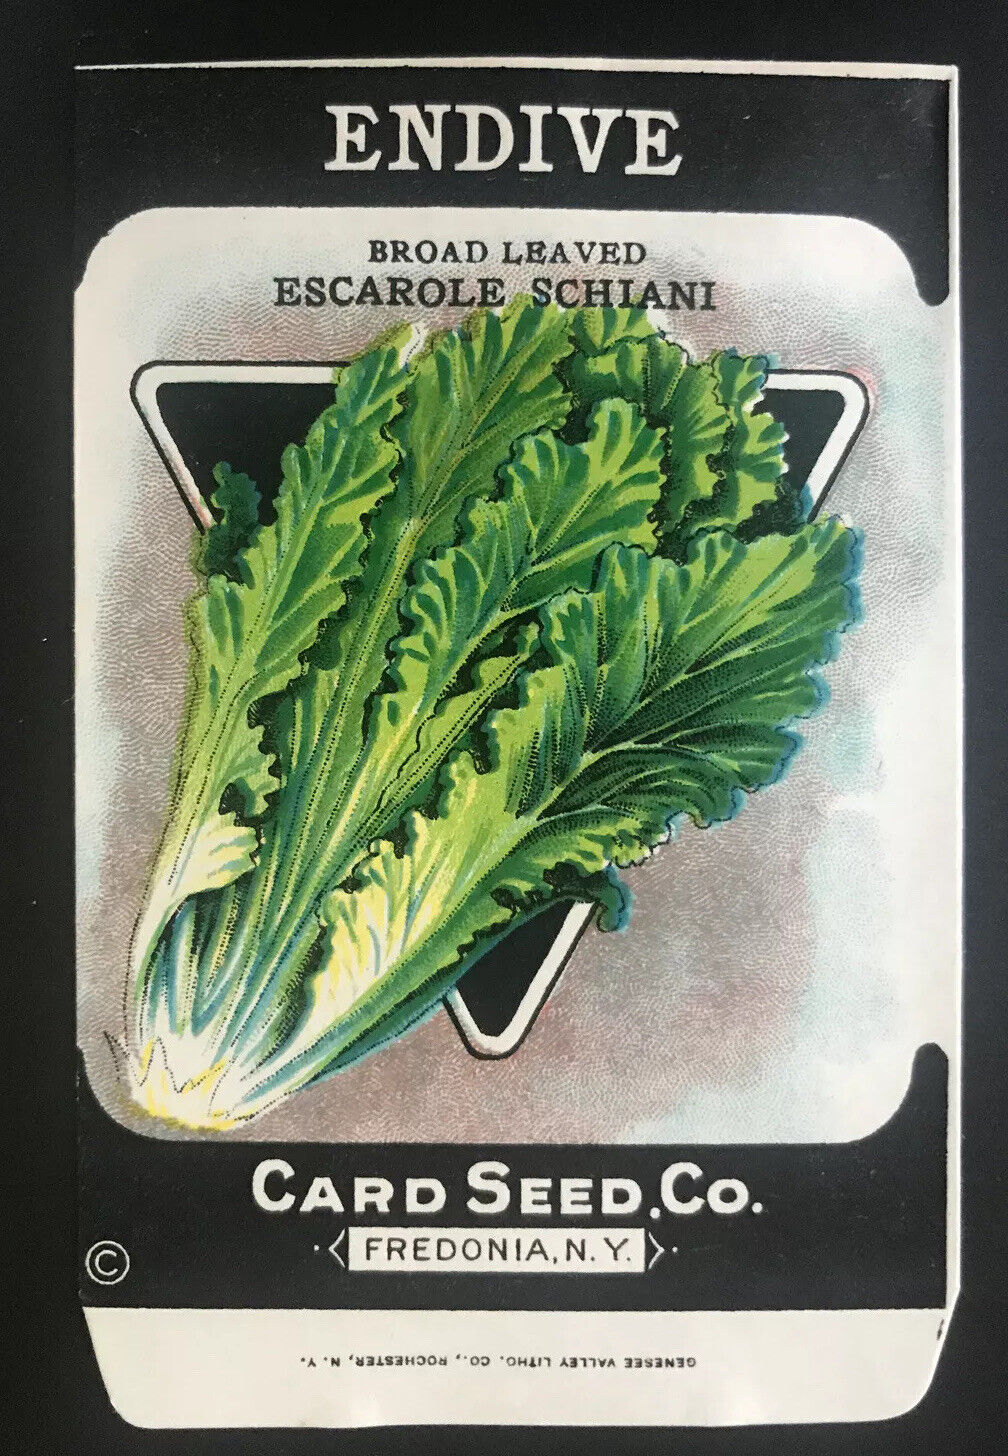 1920s Litho Antique Vintage Card Seed Co. Packet Pack Endive broad Leaved Unused